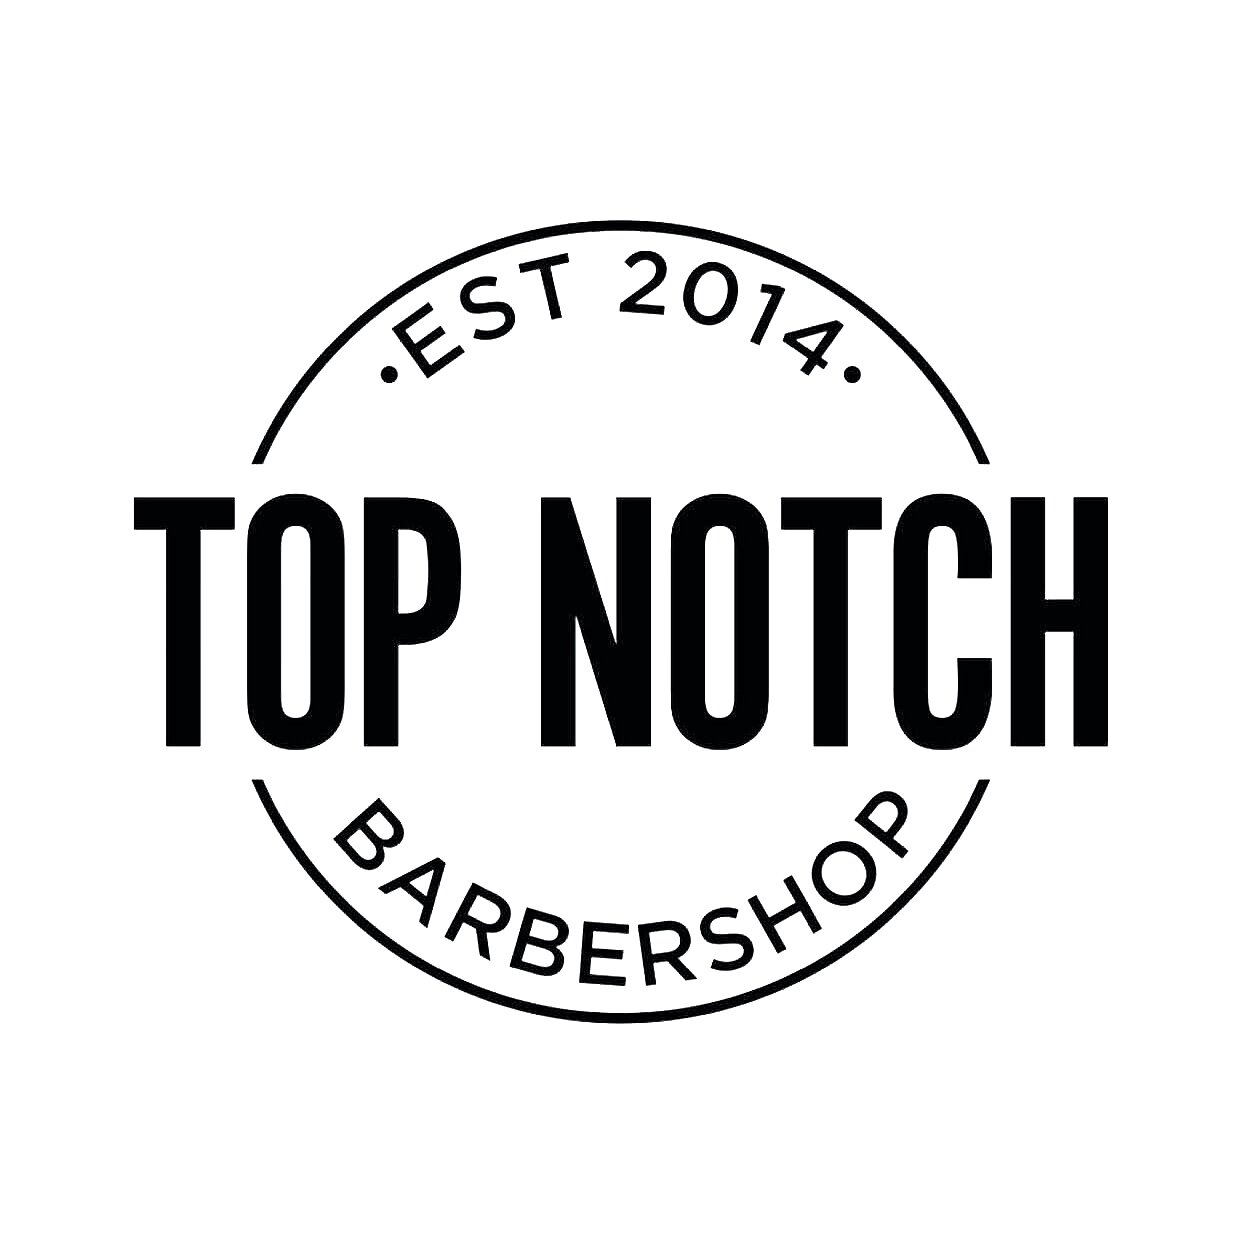 Top notch barbershop